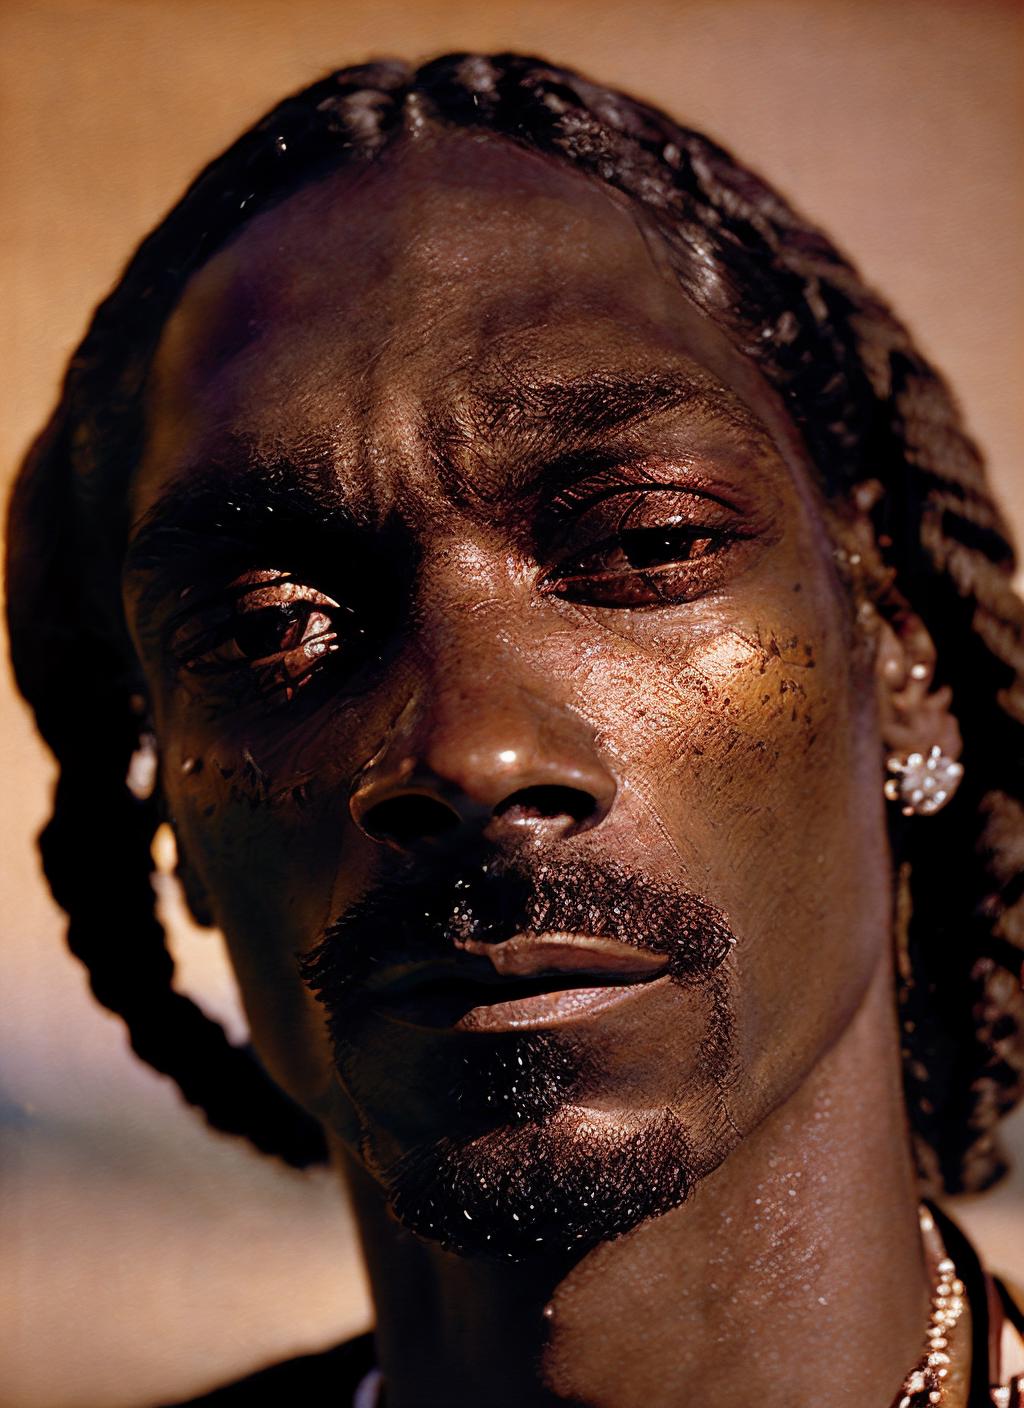 Snoop Dogg image by malcolmrey